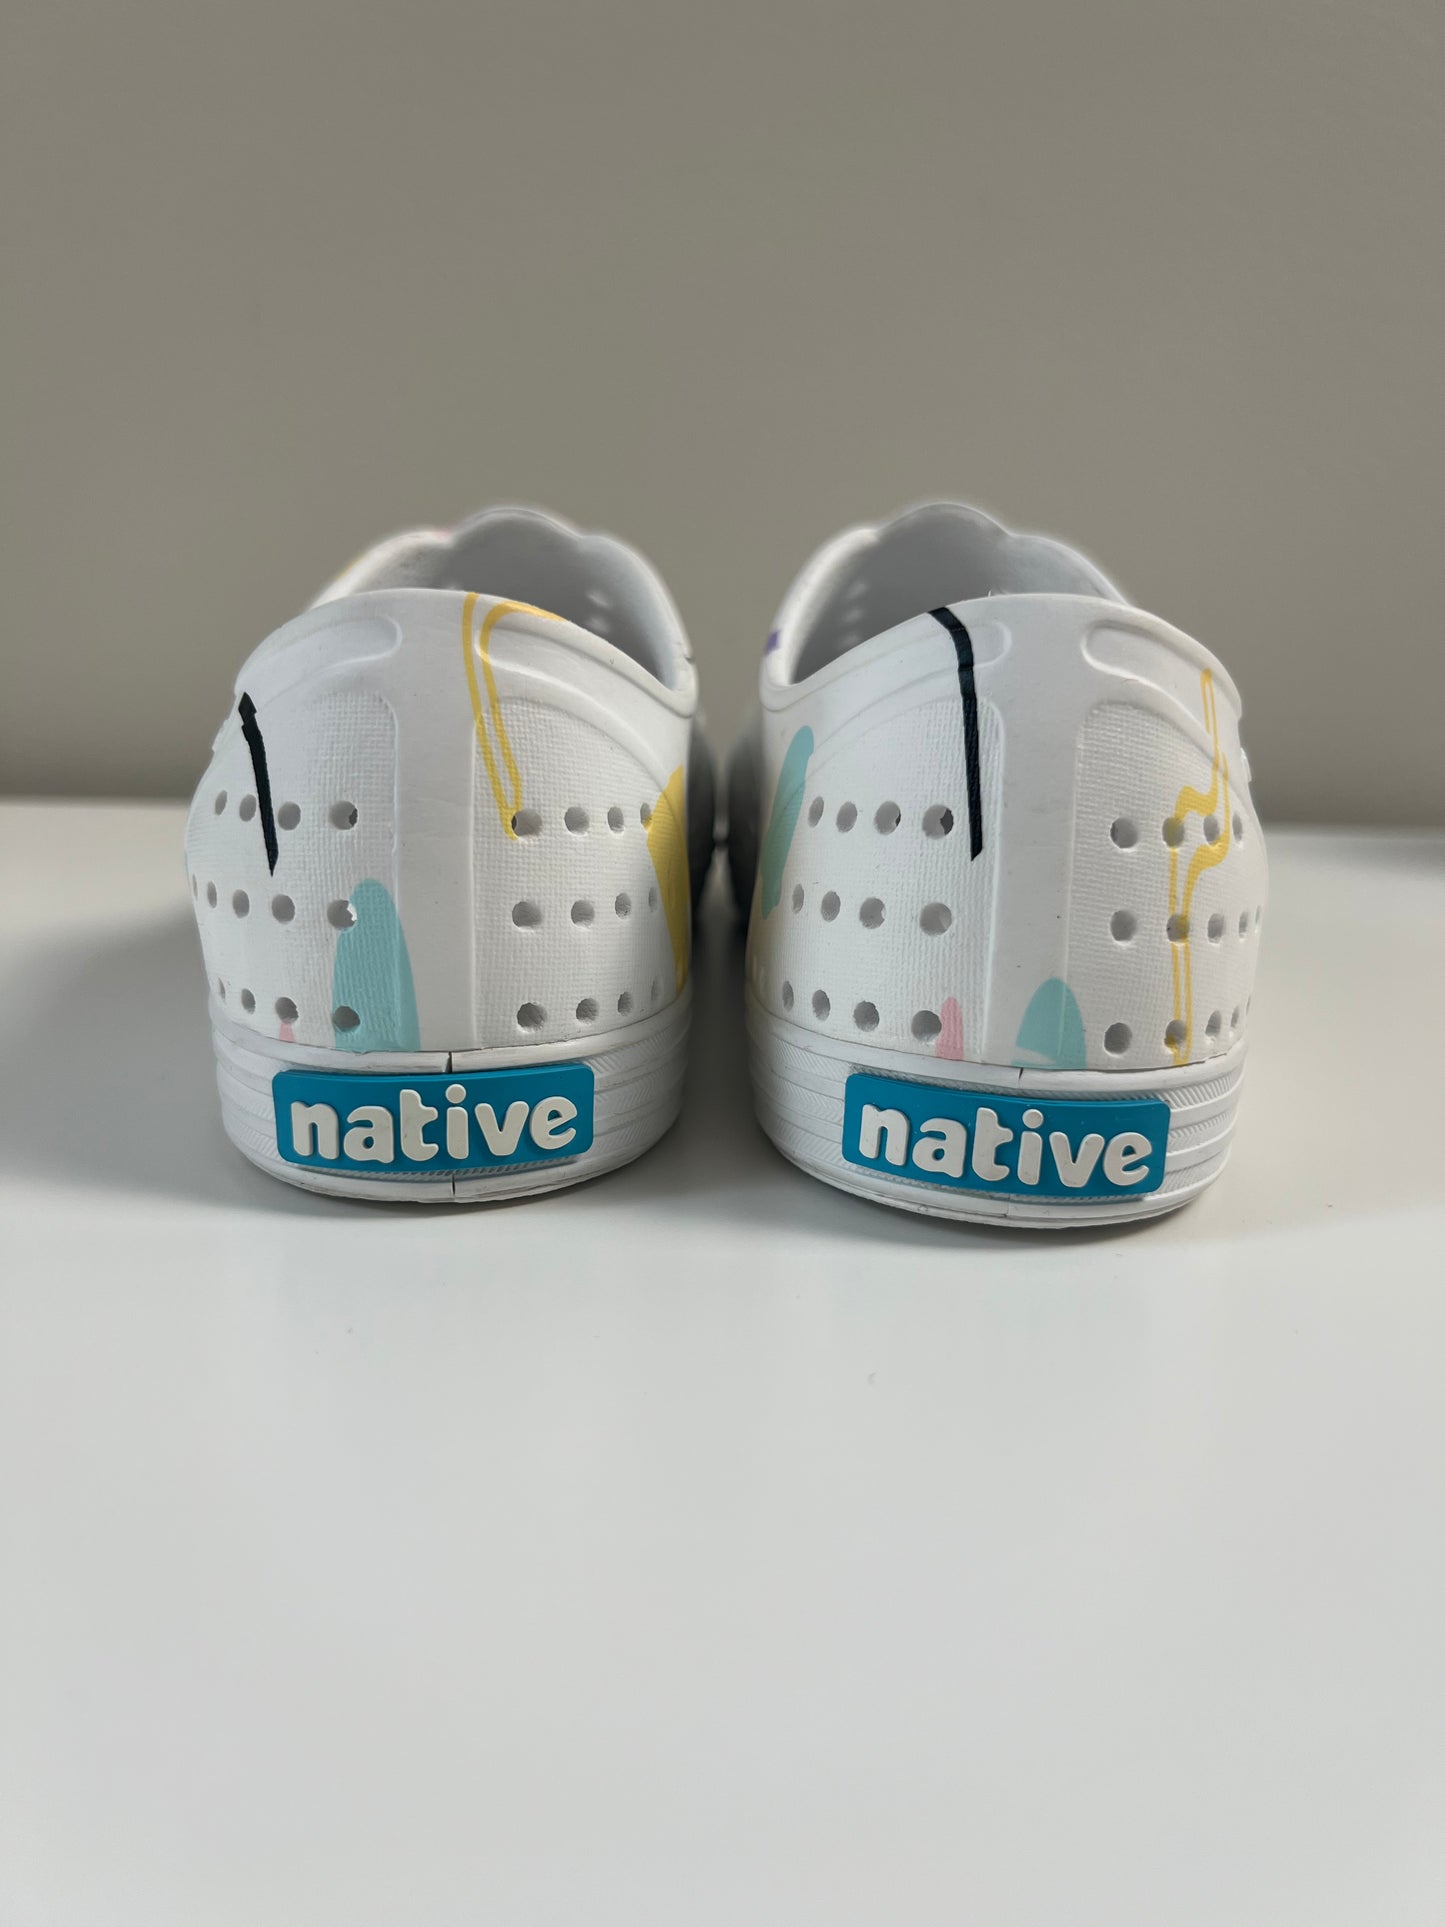 NEW Jericho Natives Women's Shoes - Sz. 8